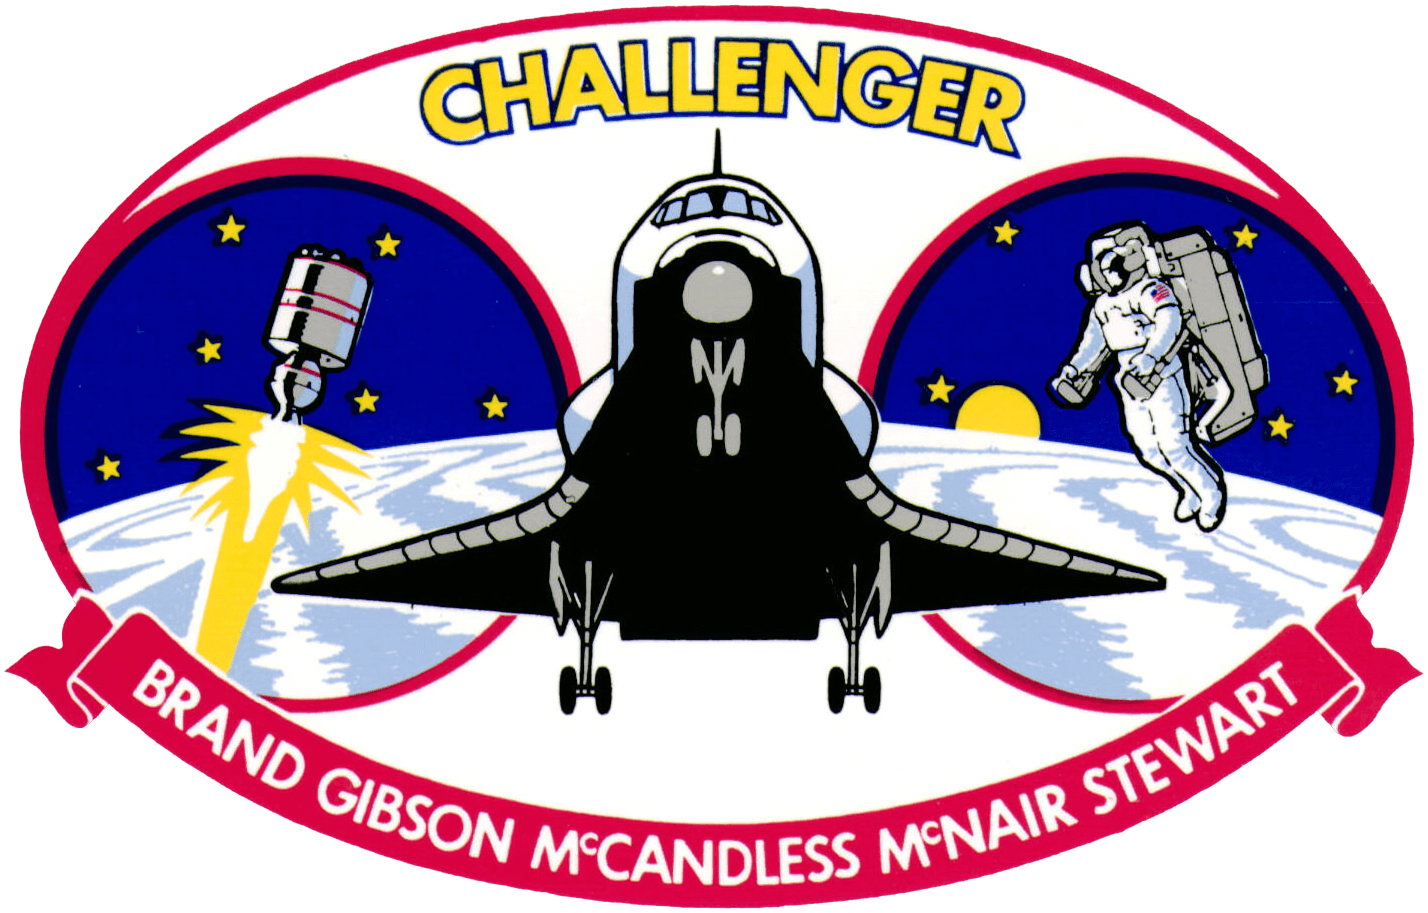 STS-41-B